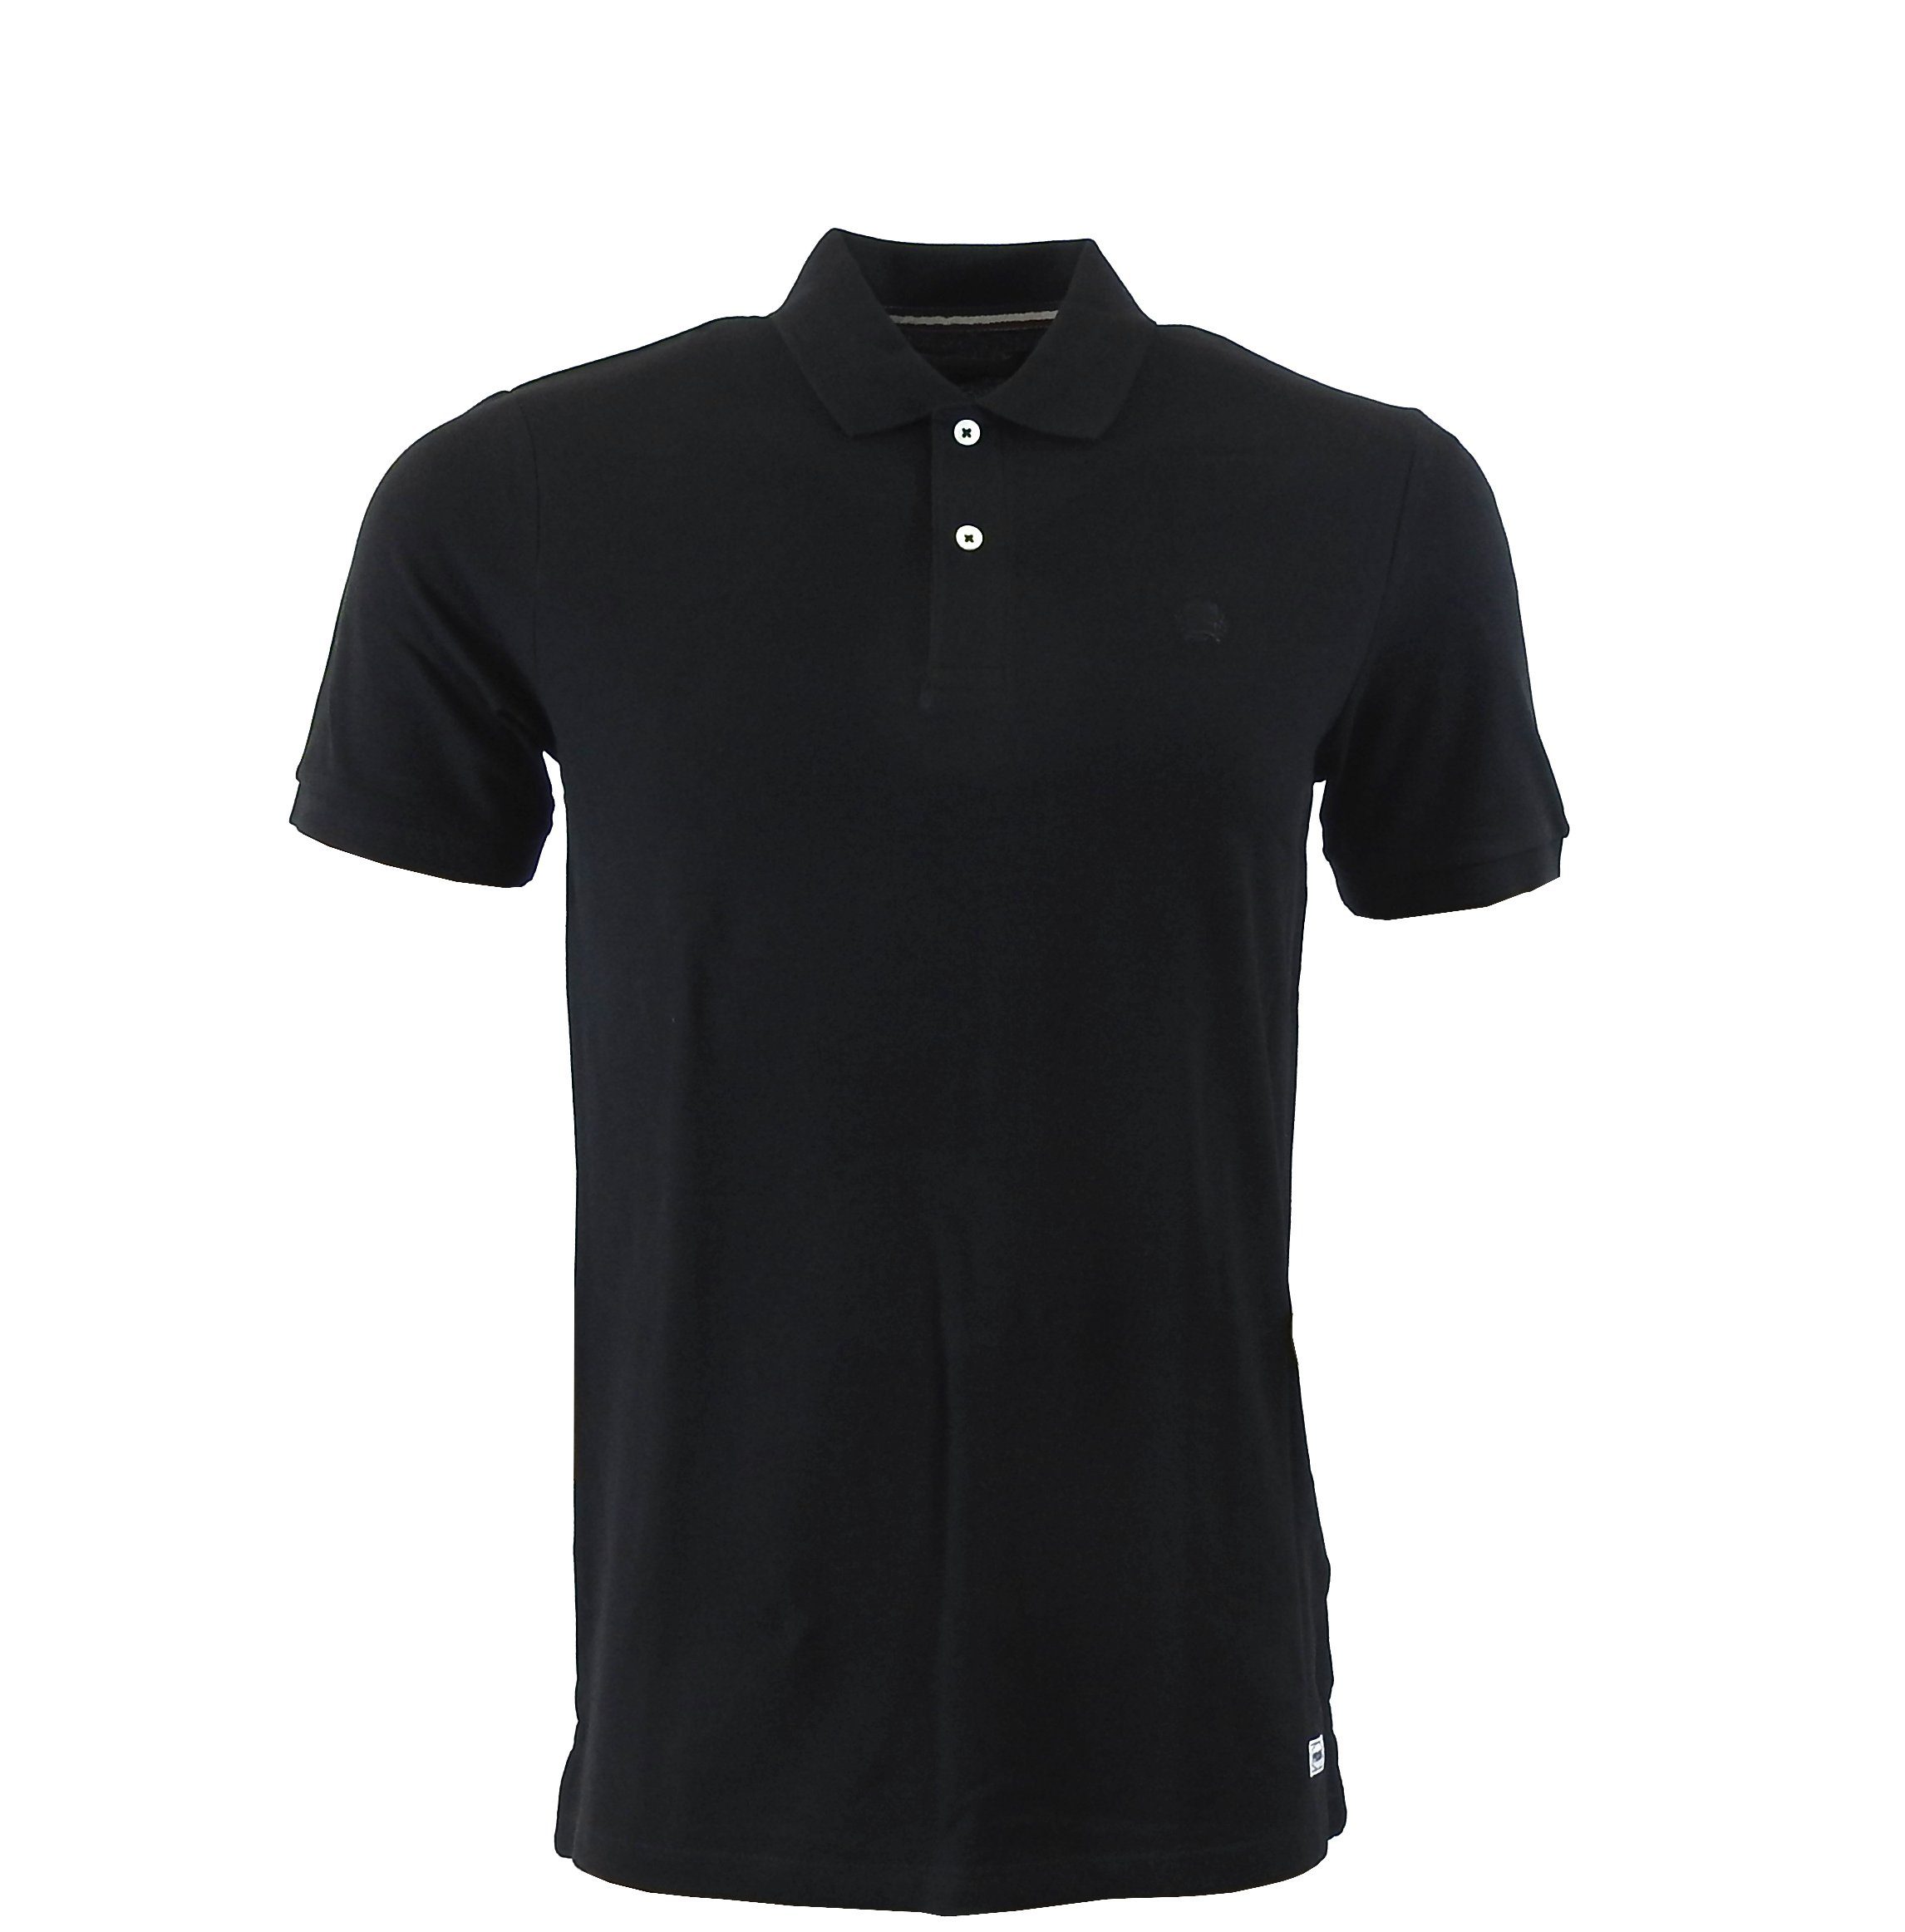 Polokragen Kurzarm T-Shirt Basic Polohemd Schwarz Polo Herren TShirt PRODUKT Poloshirt Shirt Baumwolle BIO